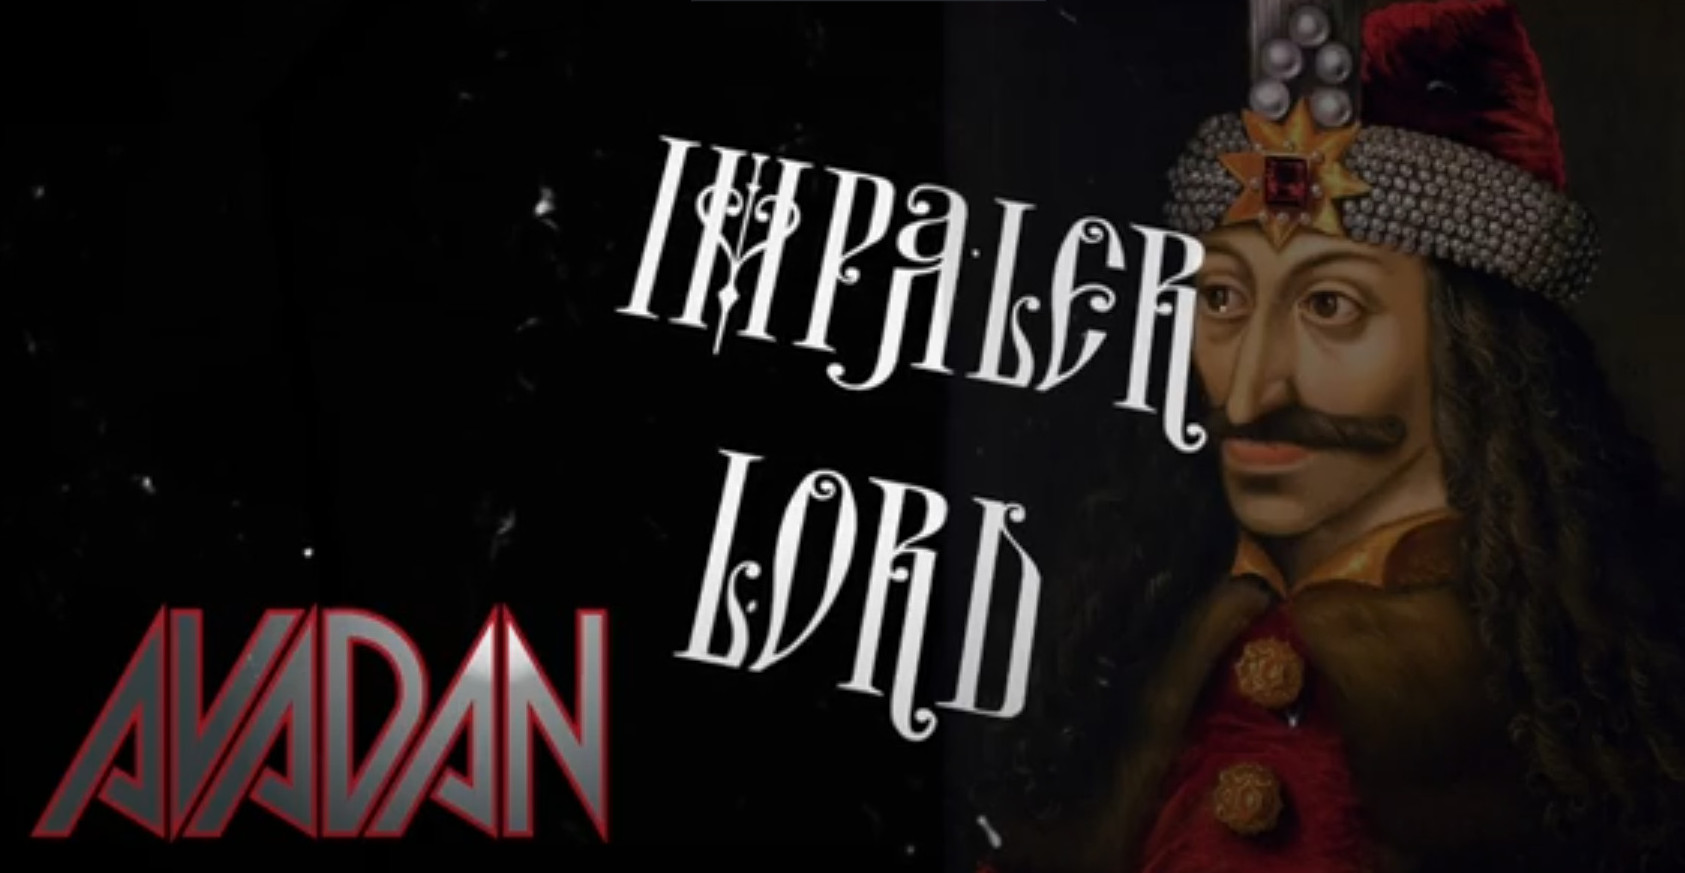 Avadan - Impaler Lord